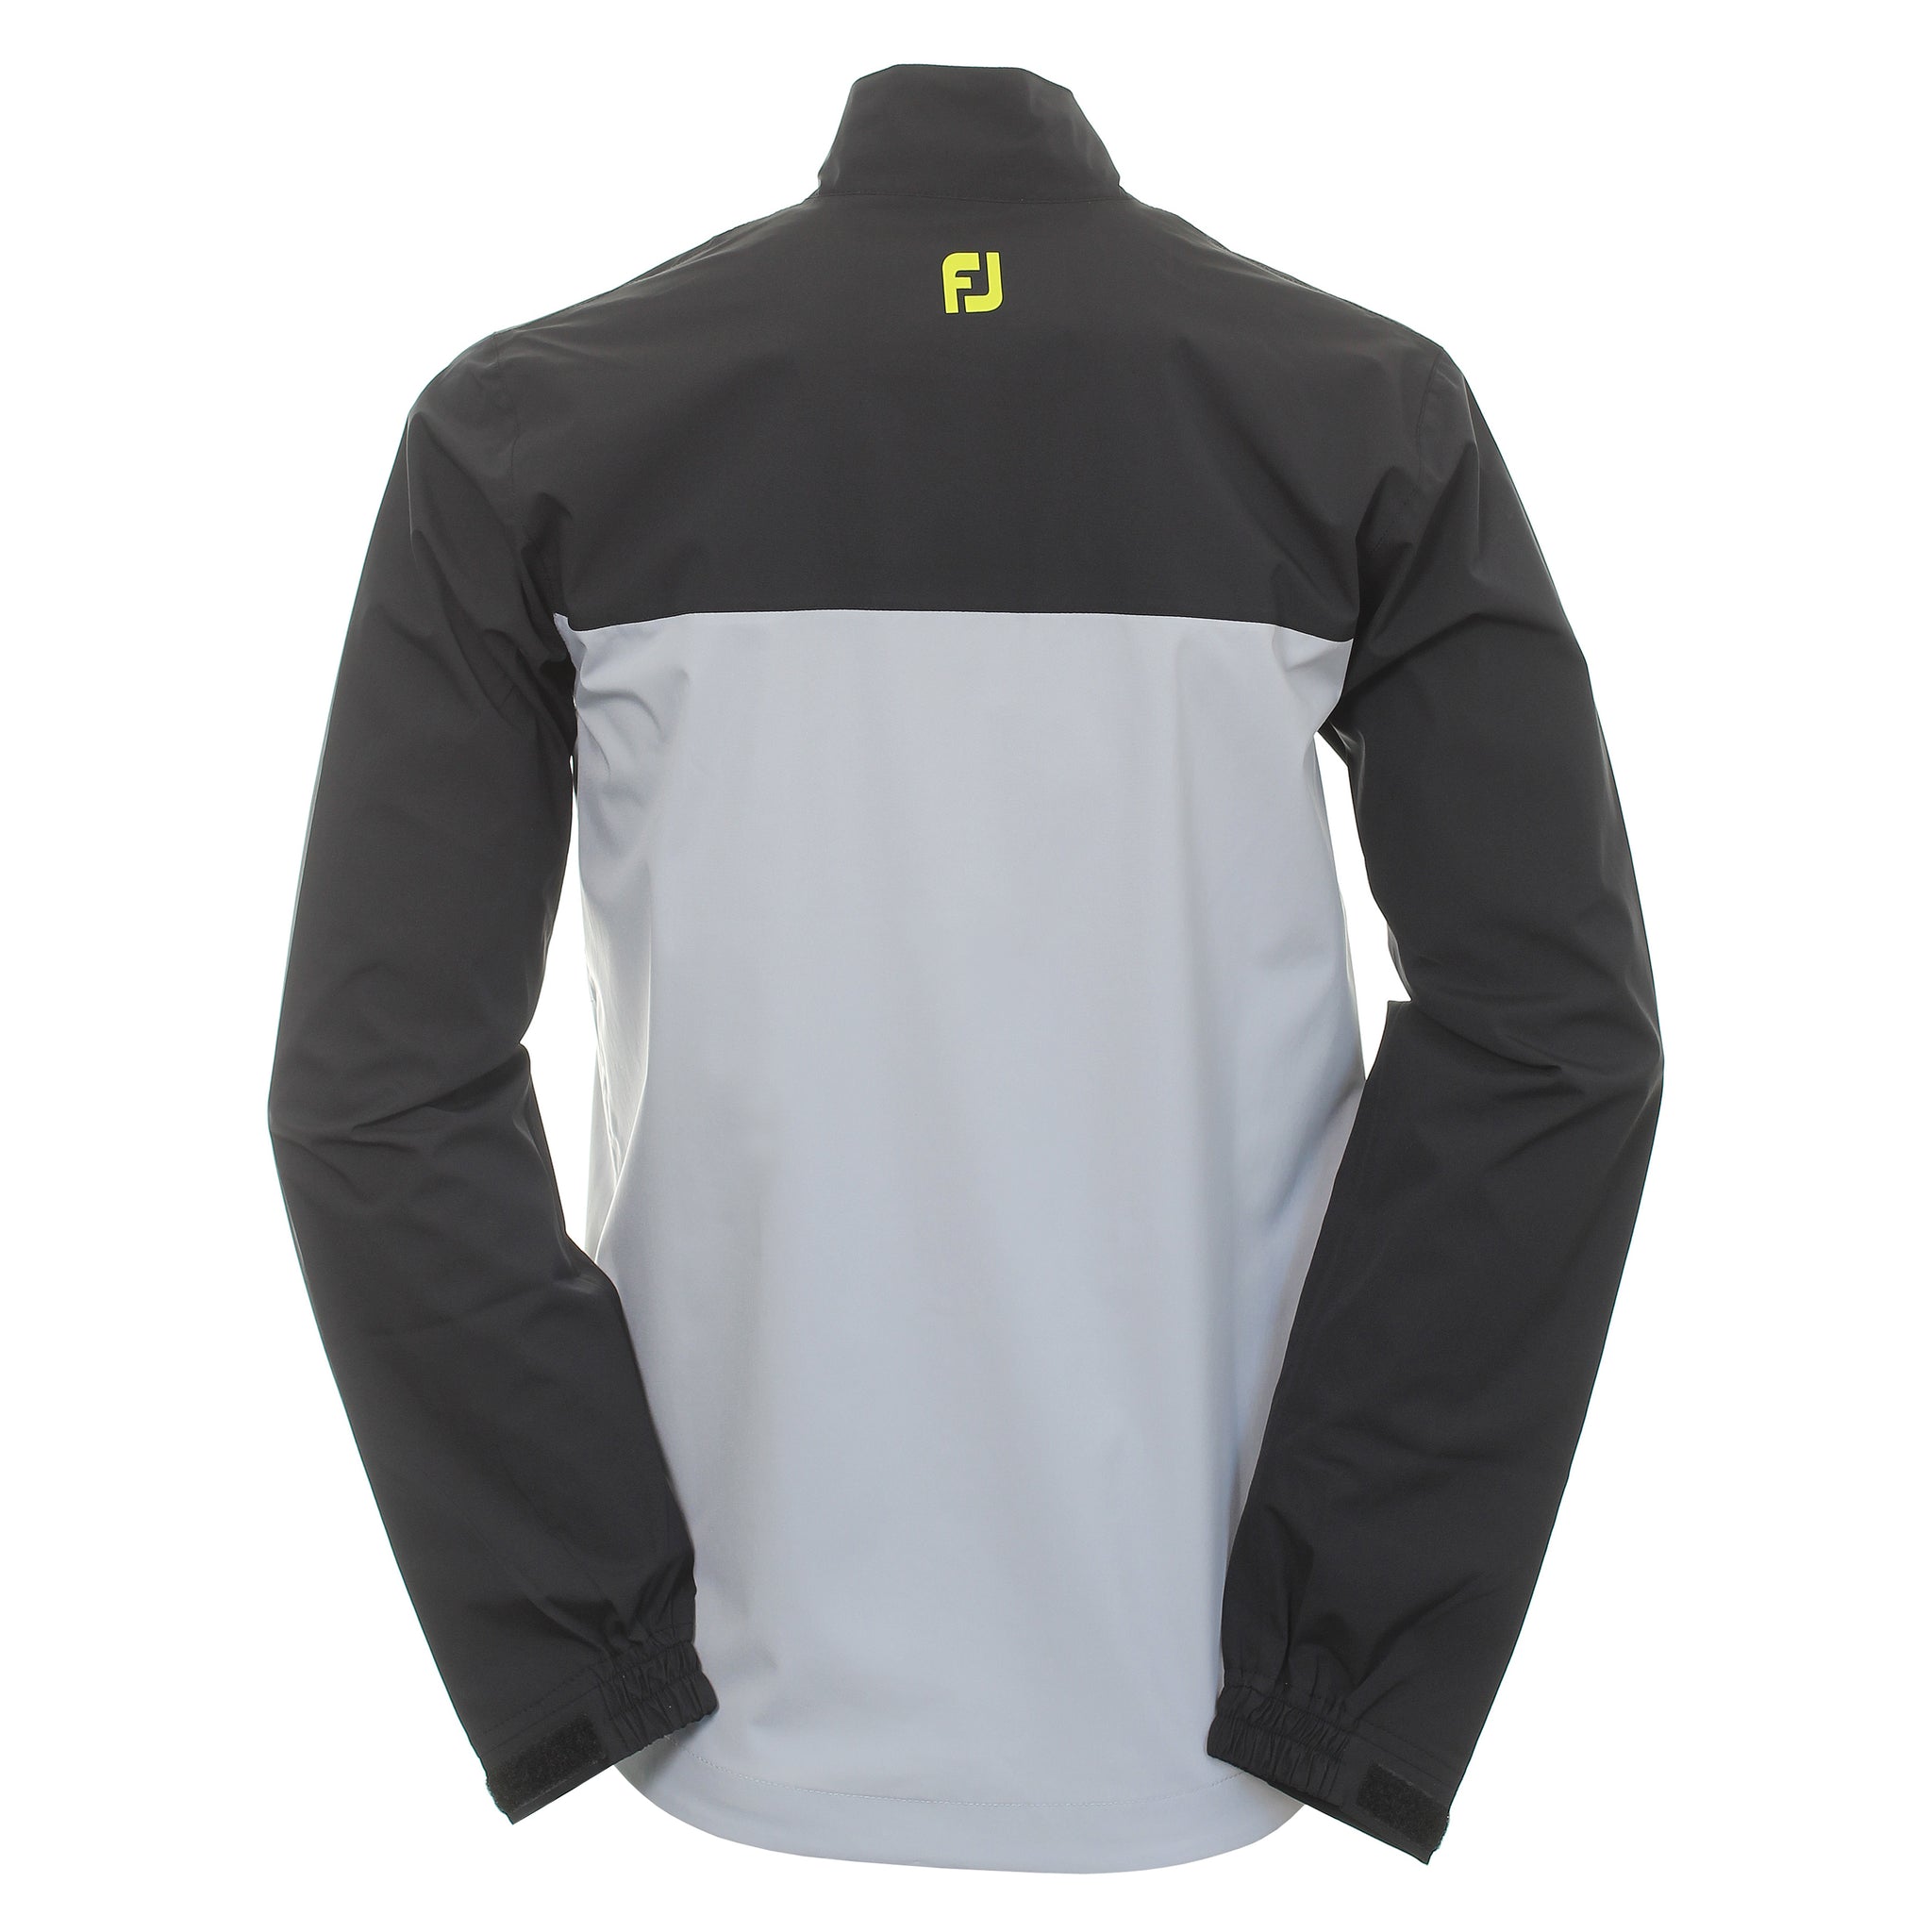 footjoy-golf-hydrolite-jacket-87976-black-grey-lime